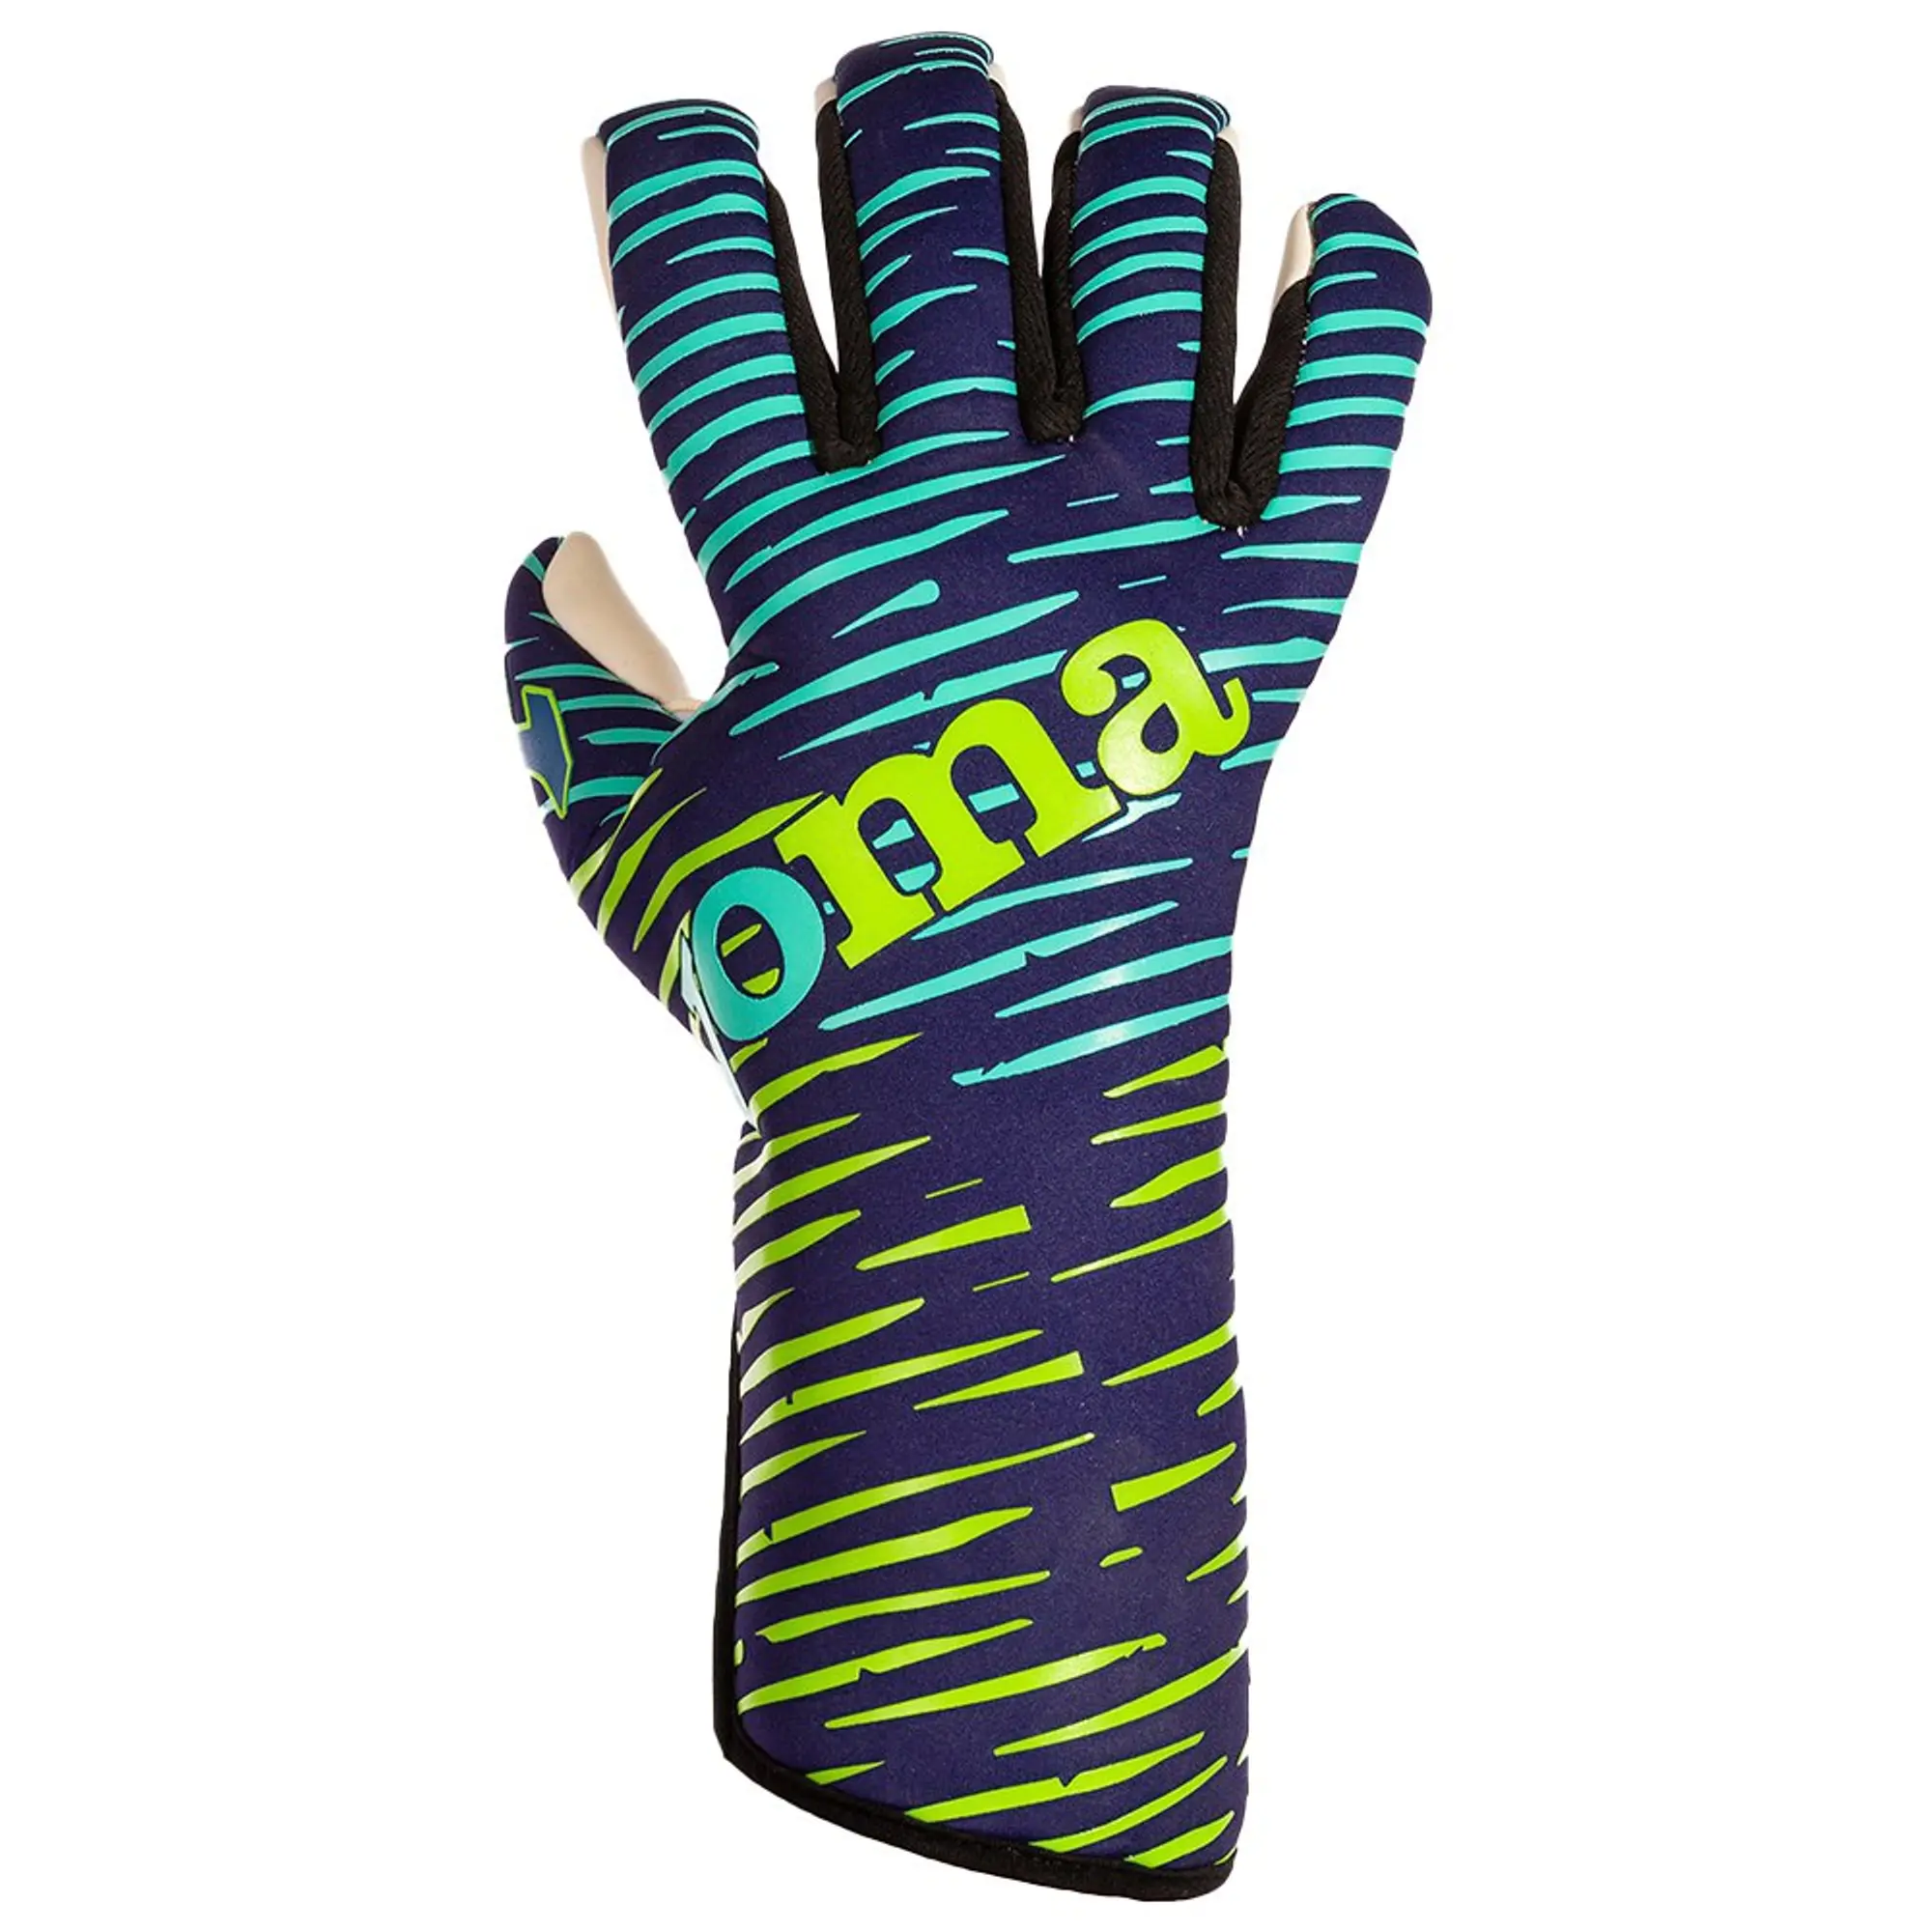 Joma Gk Panther Goalkeeper Gloves  12 -